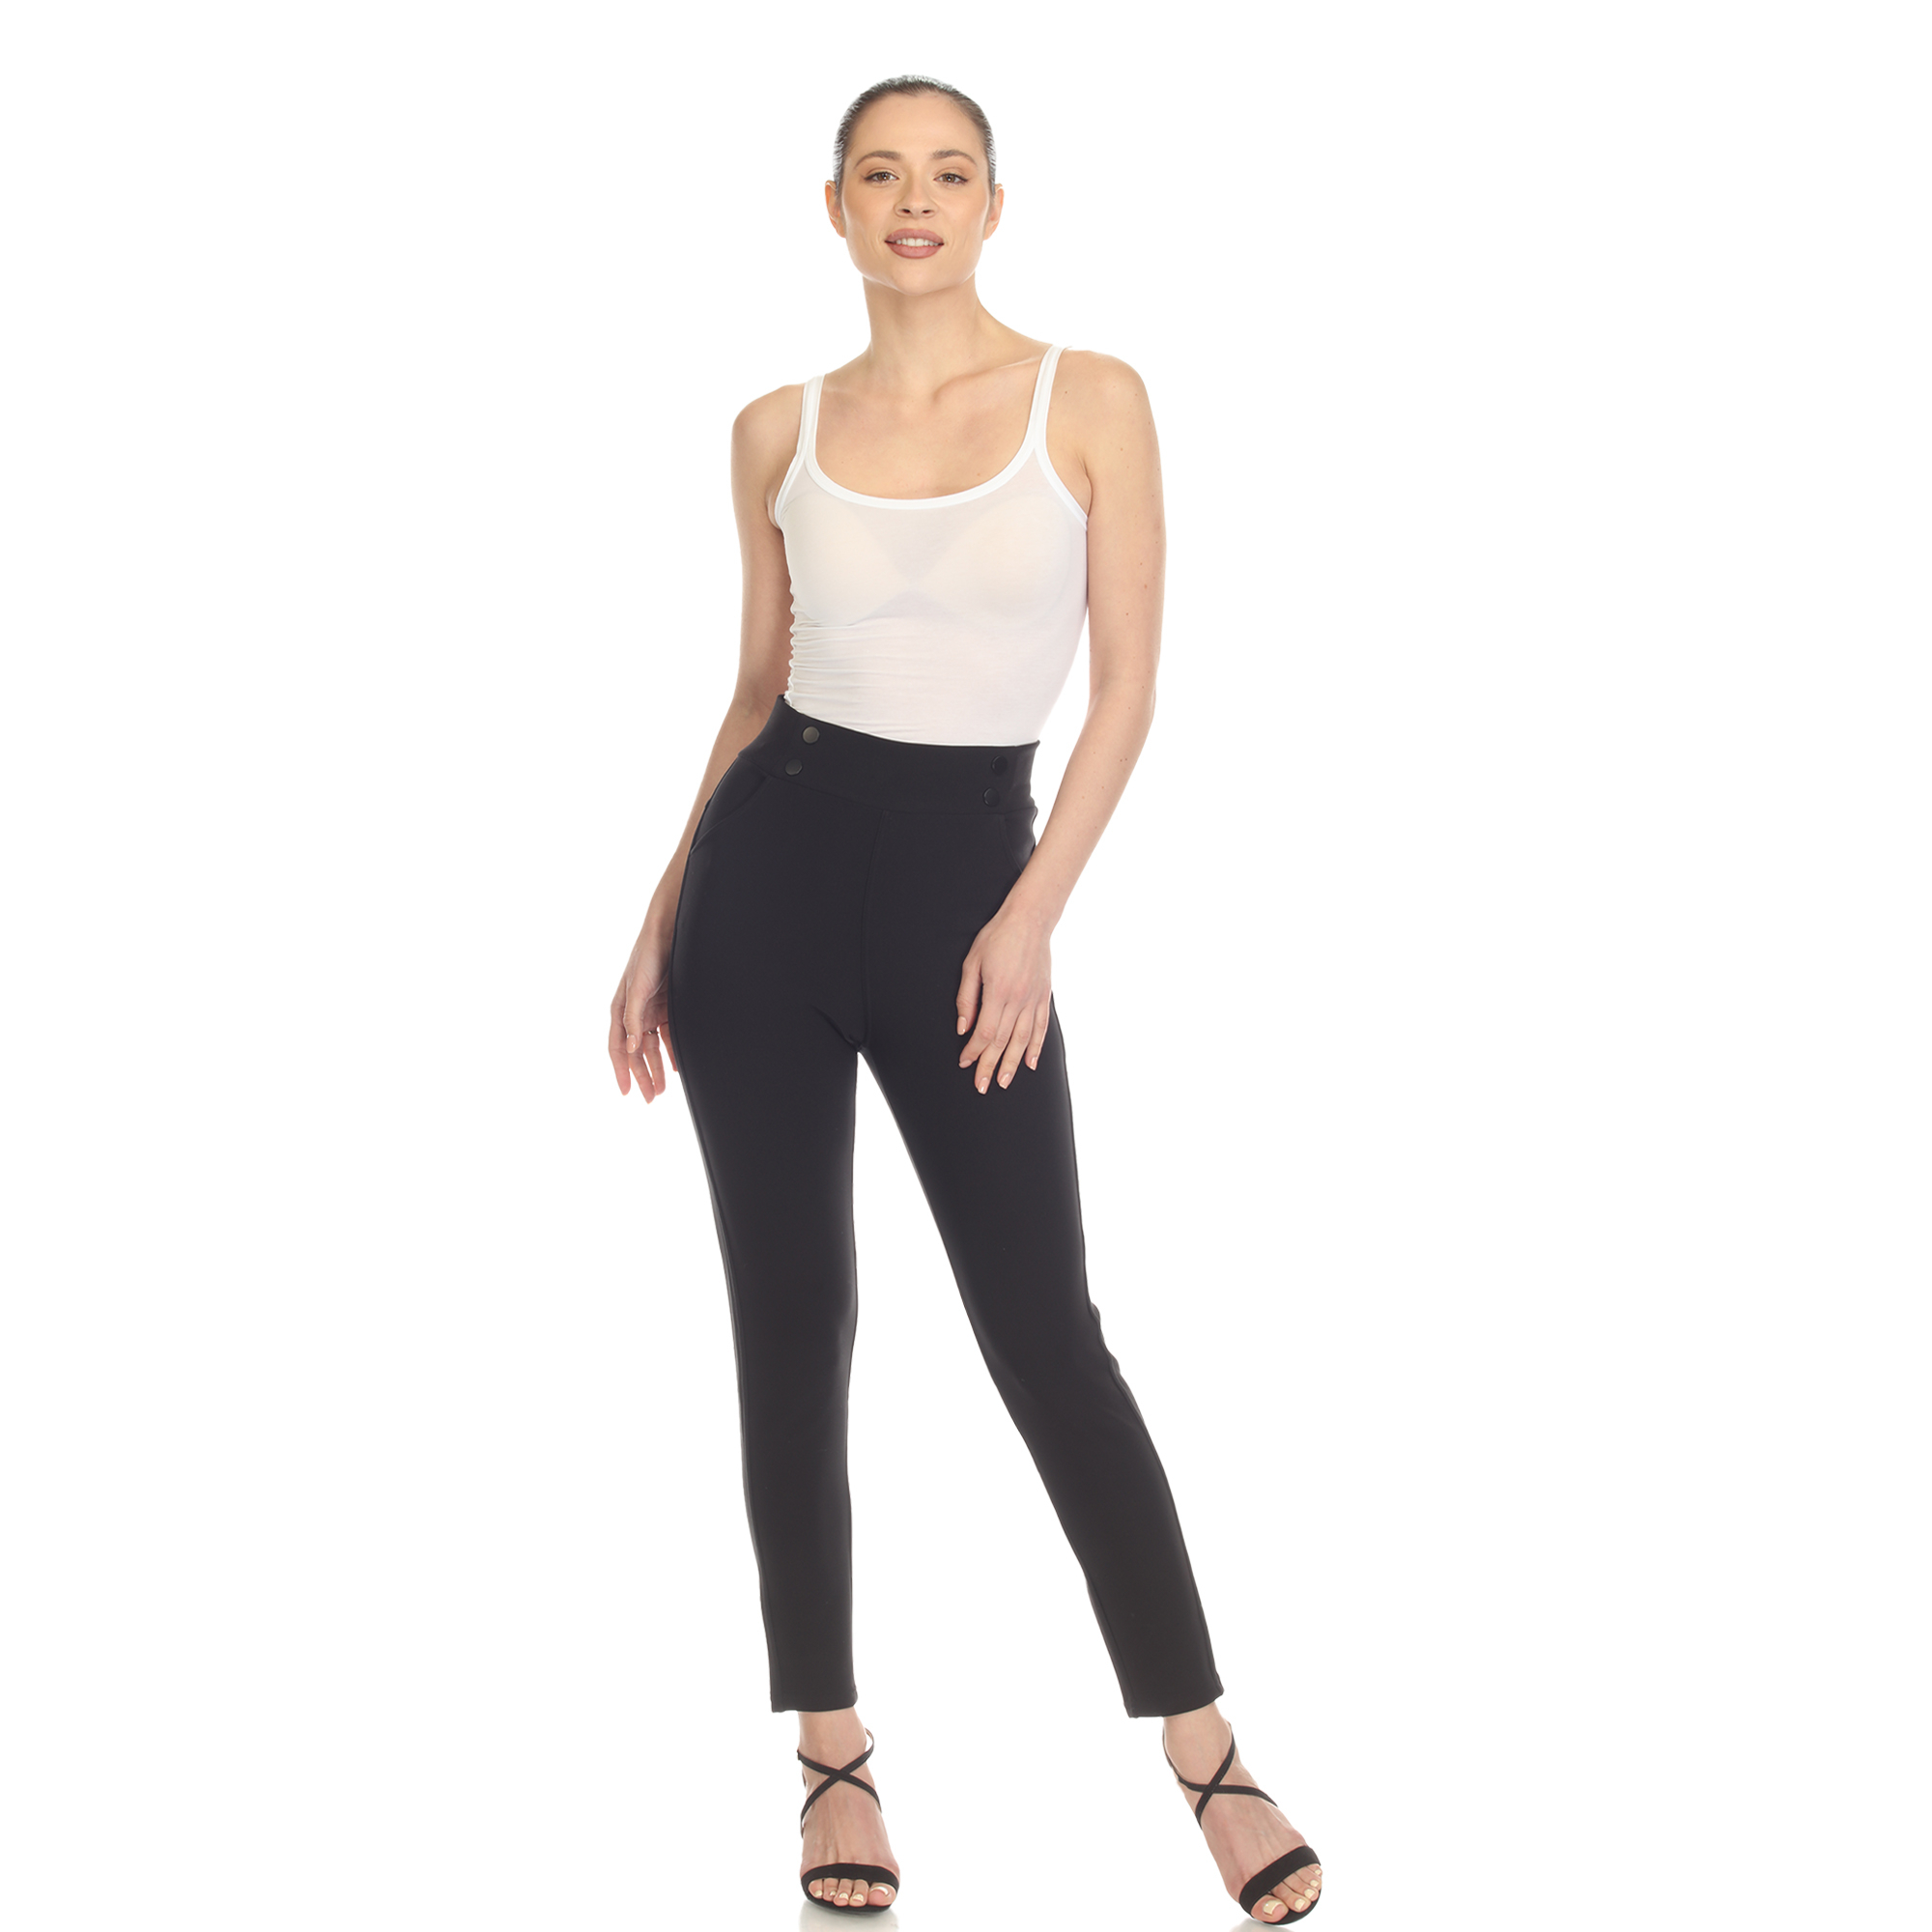 White Mark Women's Super Soft Elastic Waistband High Waist Scuba Pants With Pockets - Black, Large